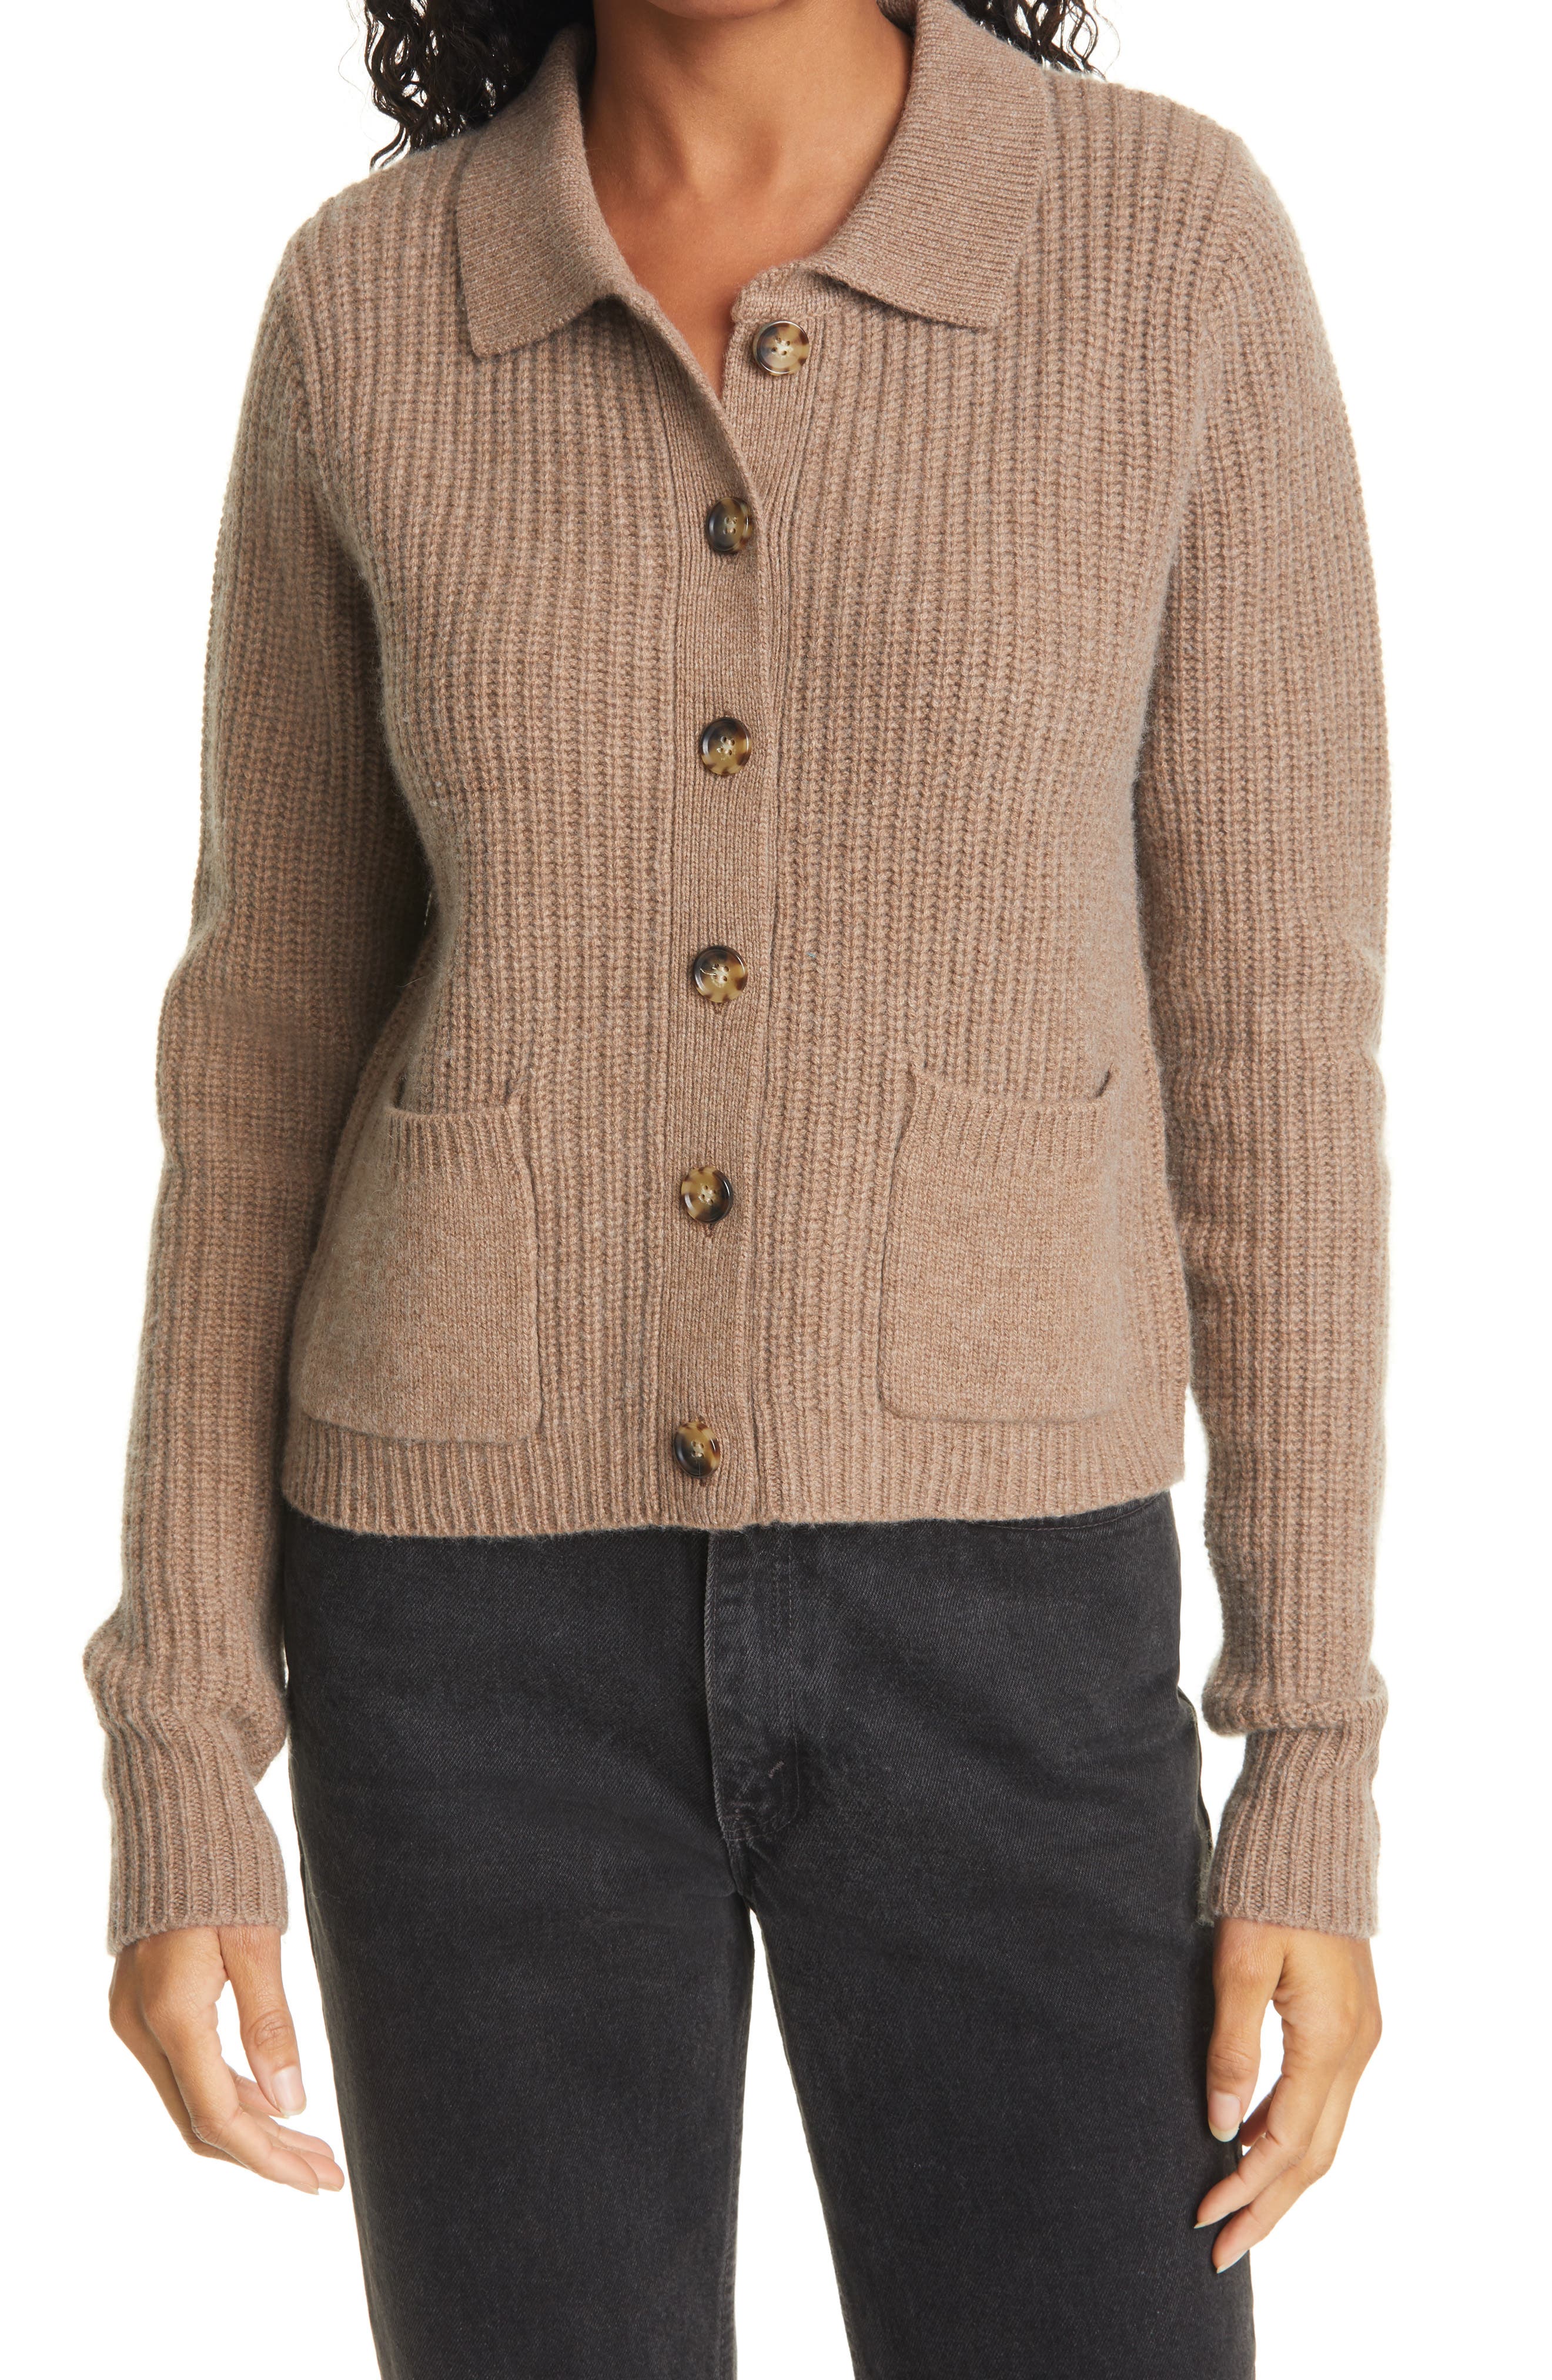 SALE Wine Metallic Cotton Cardigan Sweater